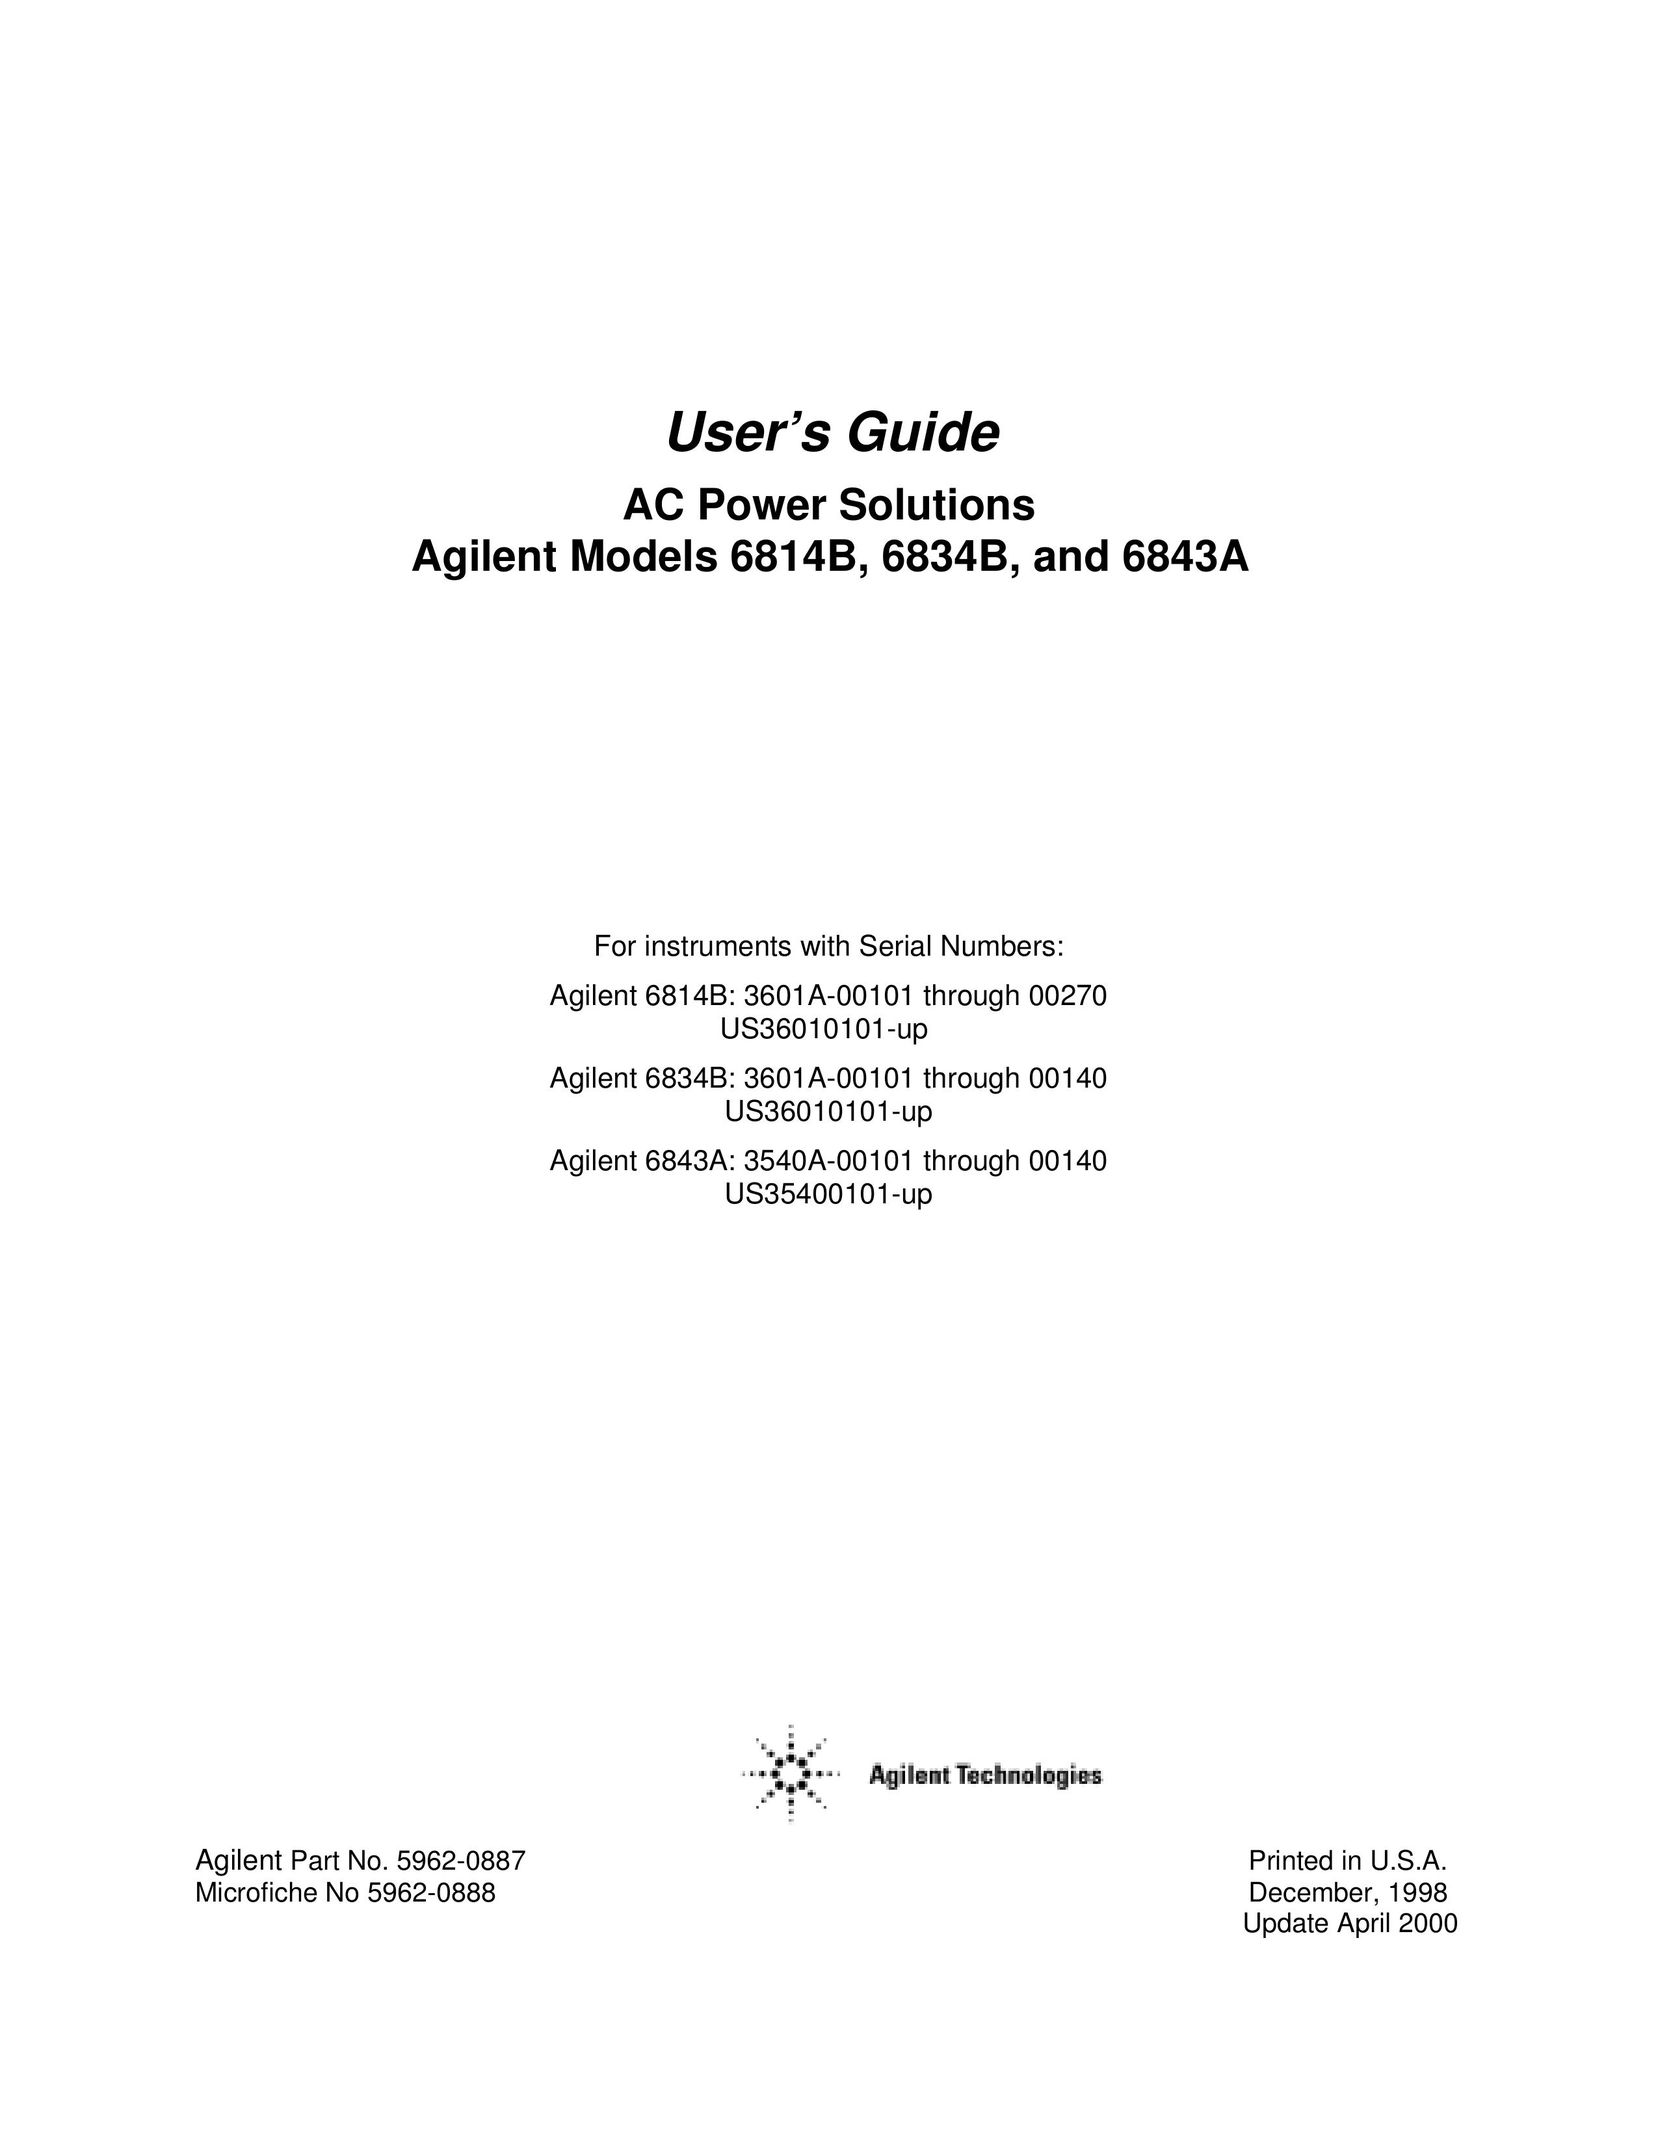 Agilent Technologies 6834B Air Conditioner User Manual